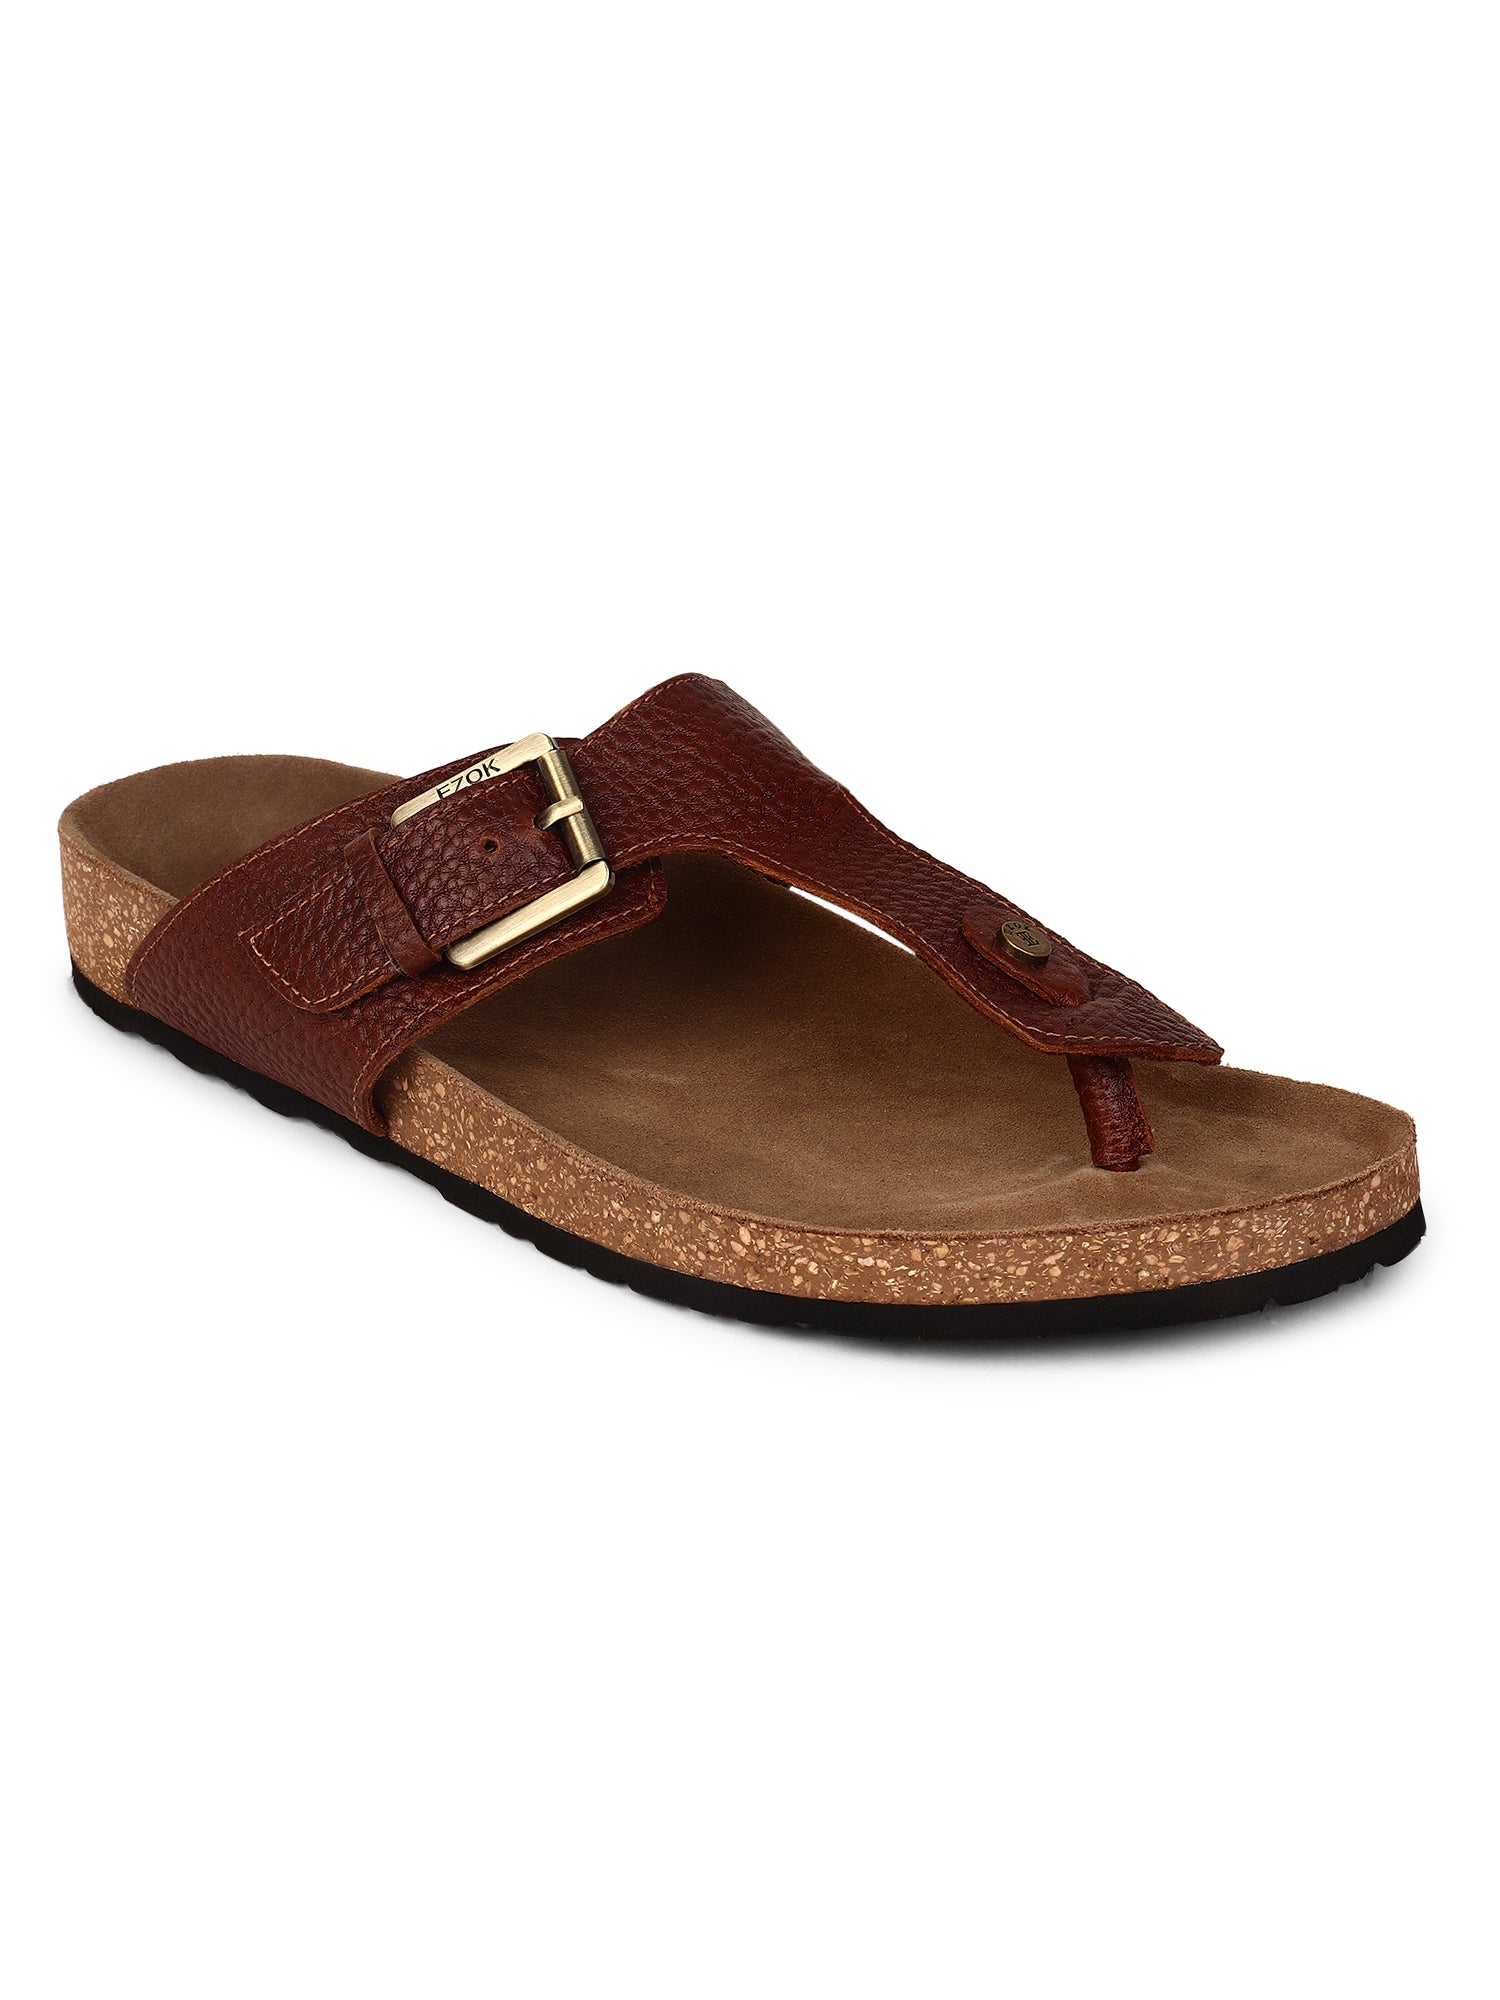 Ezok tan leather sandal (2309)